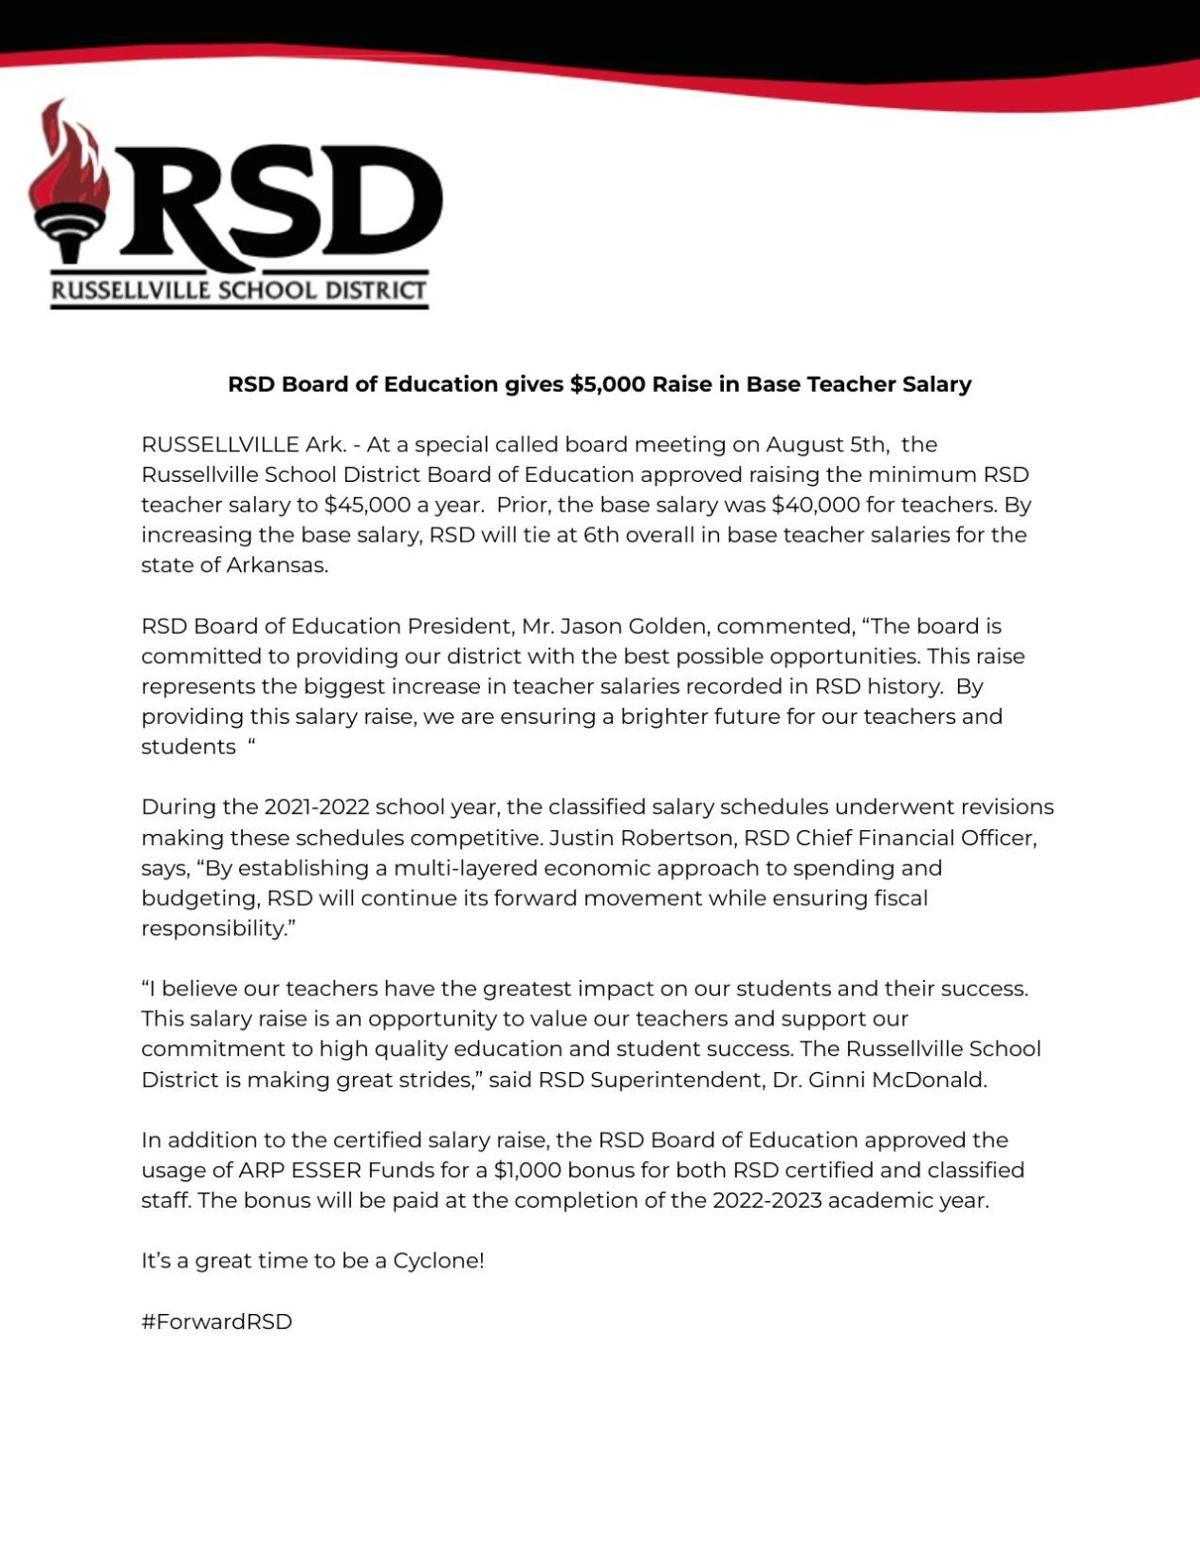 RSD Press Release